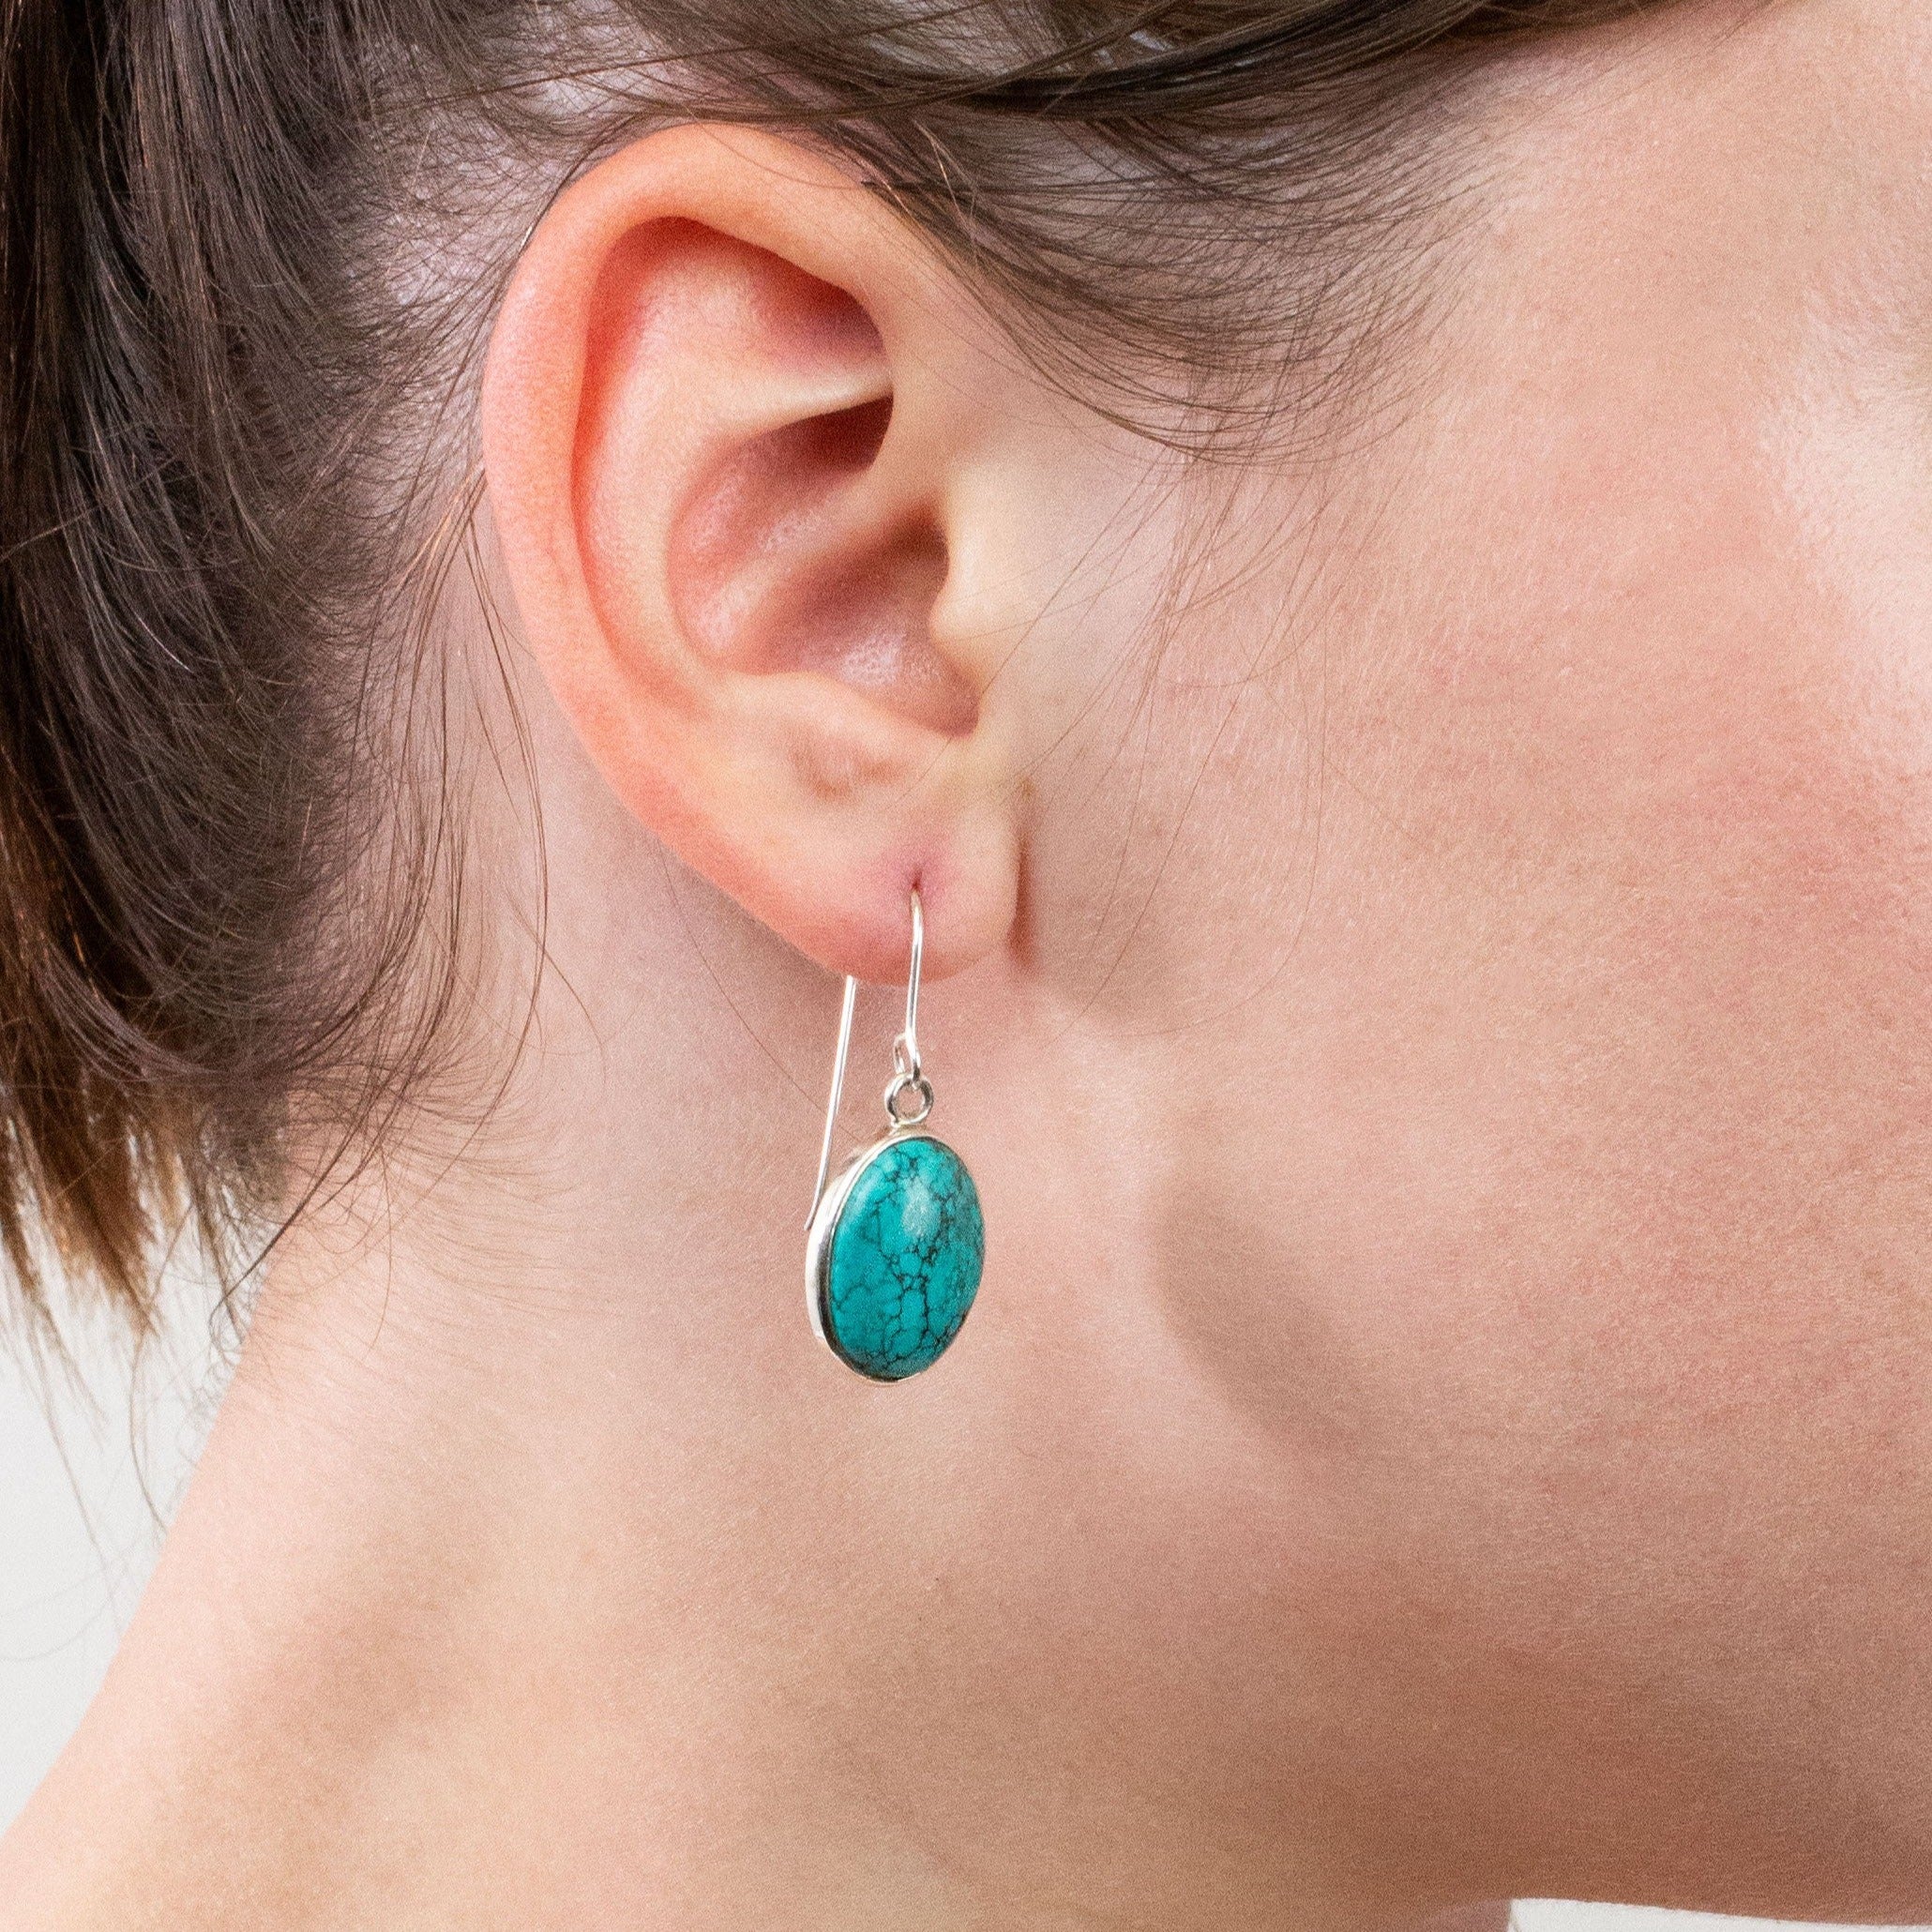 Tibetan Turquoise drop earrings on model